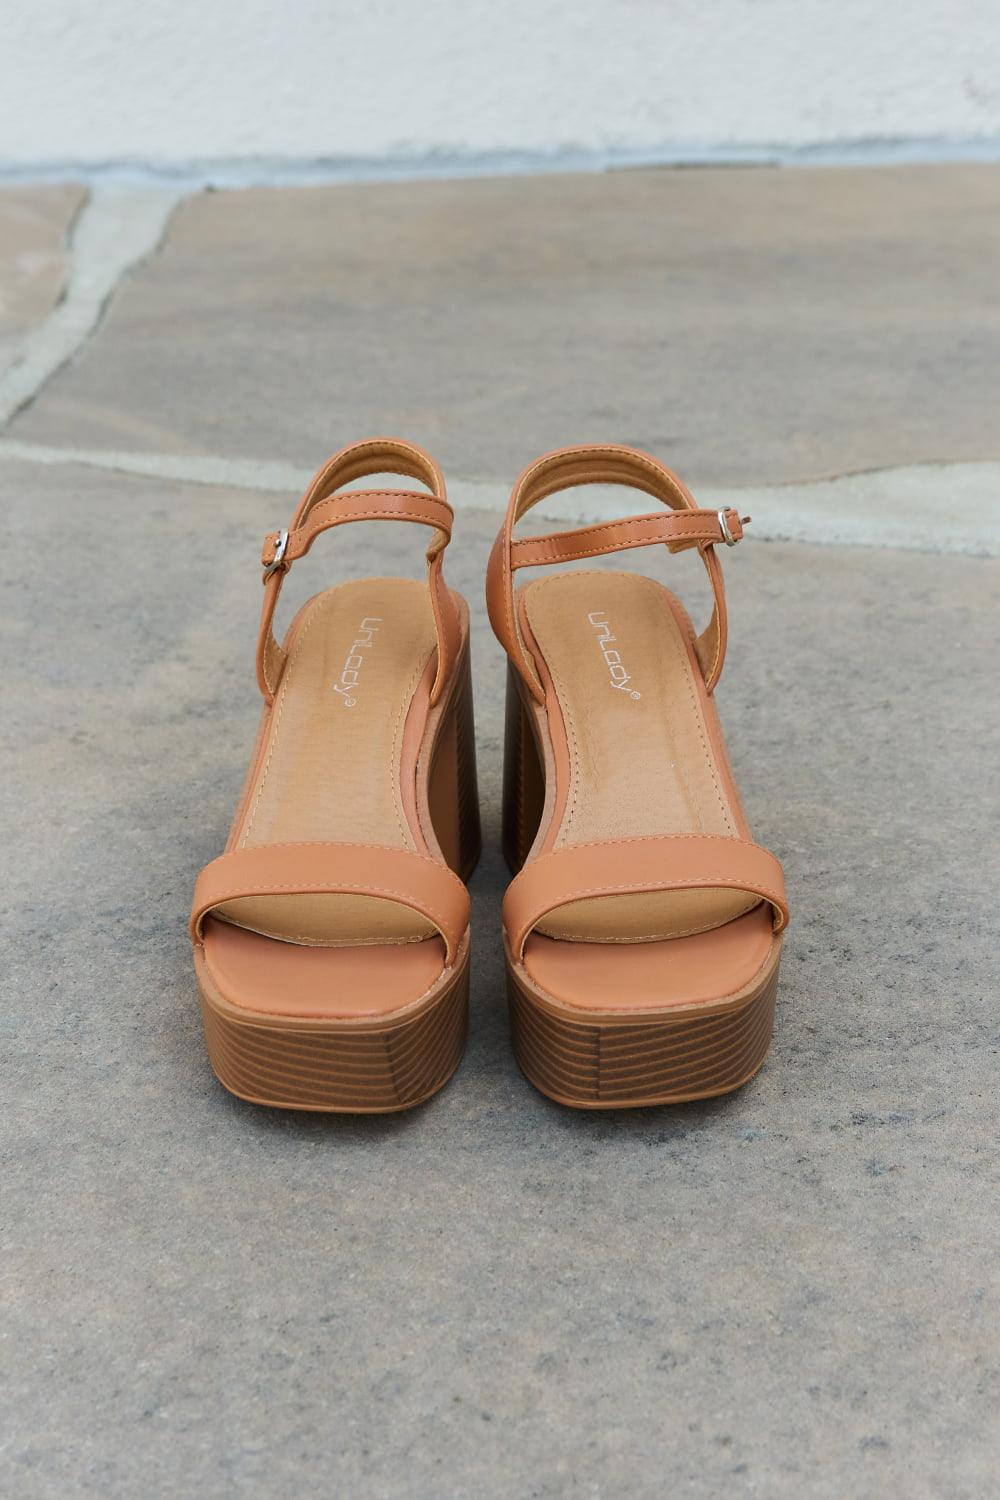 Bona Fide Fashion - Platform Heel Sandals - Women Fashion - Bona Fide Fashion